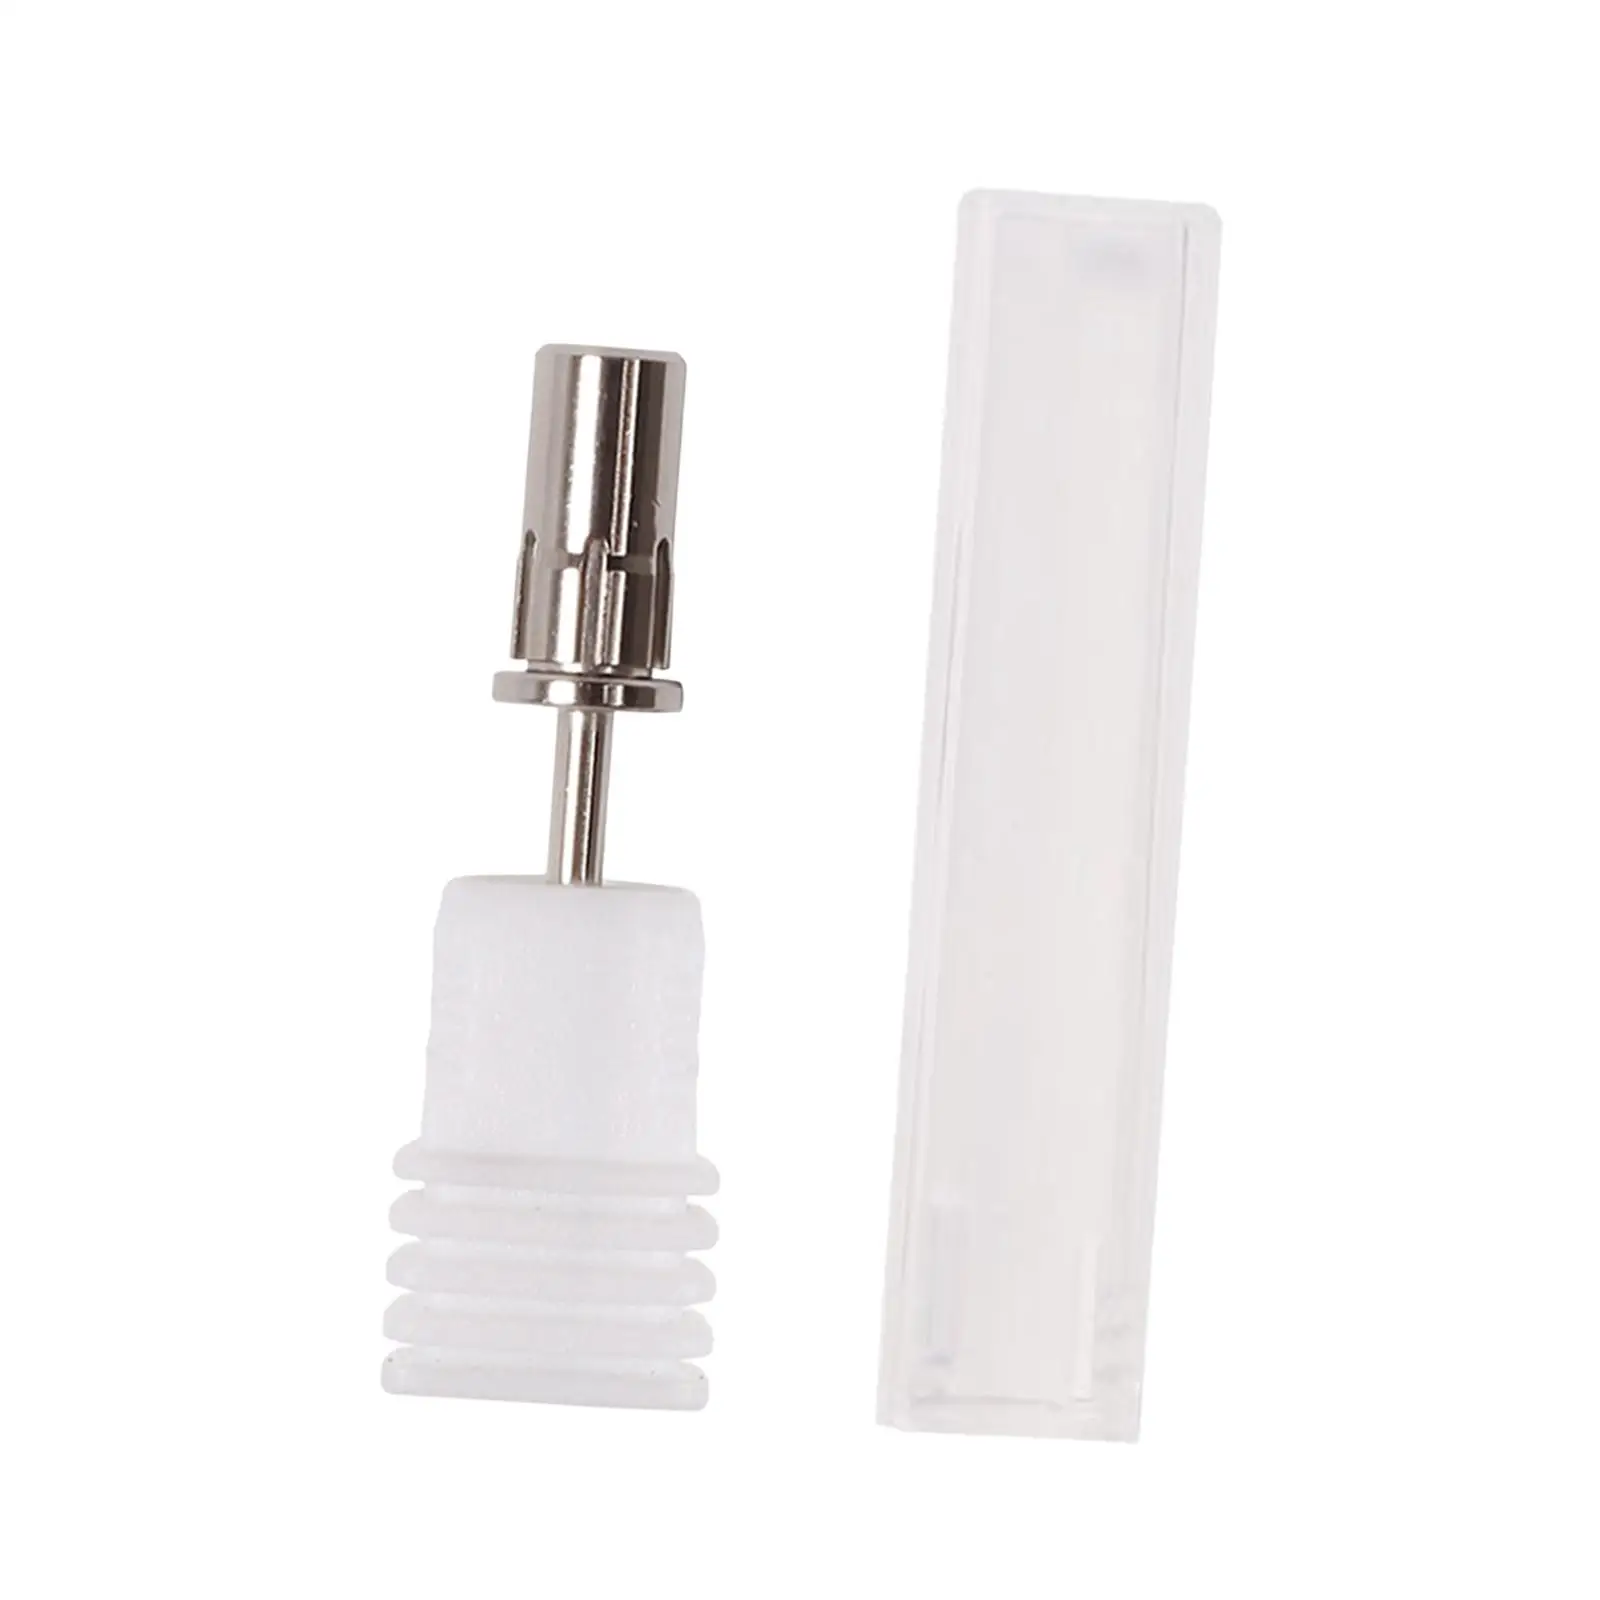 Nail Drill Bit Professional Nail Drill Accessories Durable Nail Sanding Bands Shaft for Electric Nail File Acrylics Gel Nails